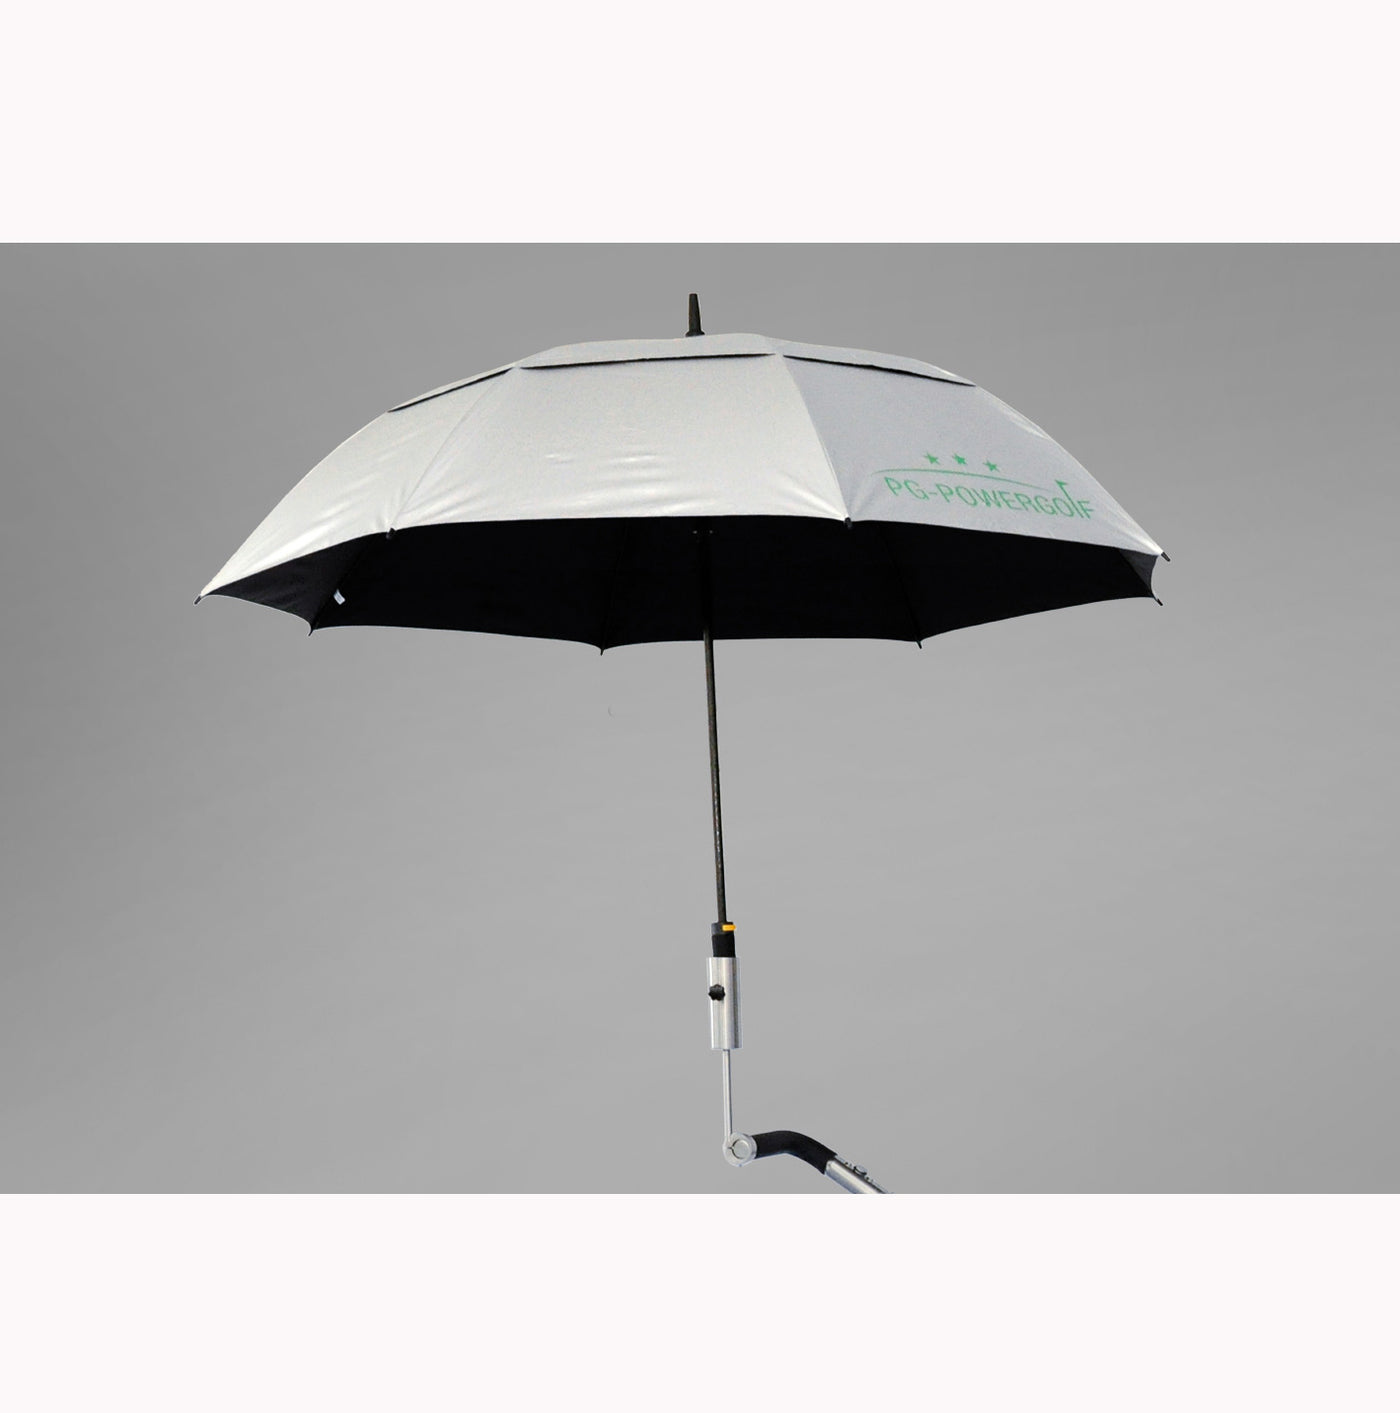 PG Powergolf golf umbrella with UV protection